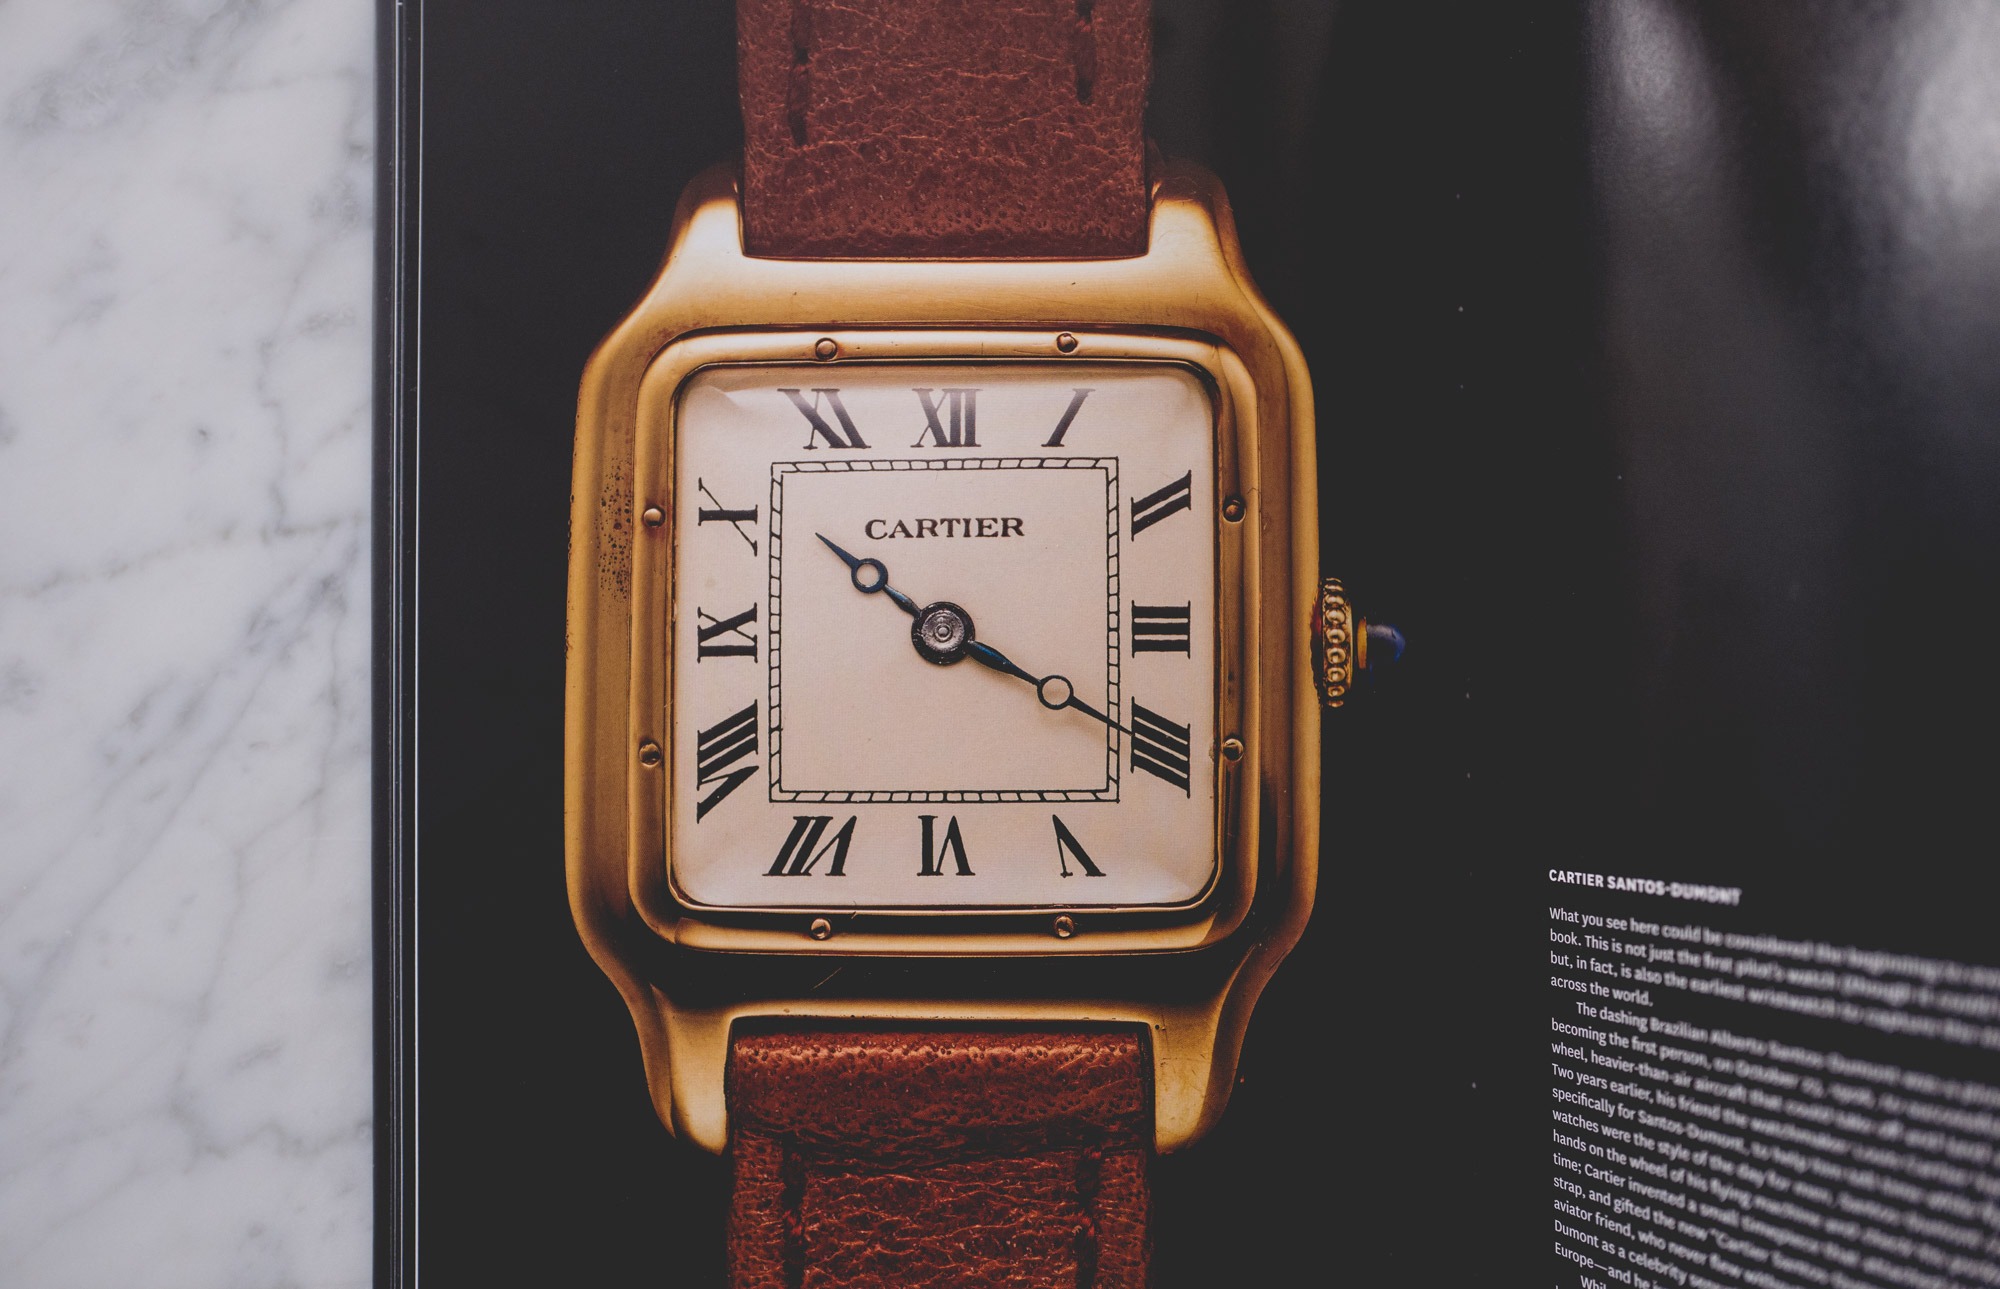 Santos de Cartier - A Man and His Watch